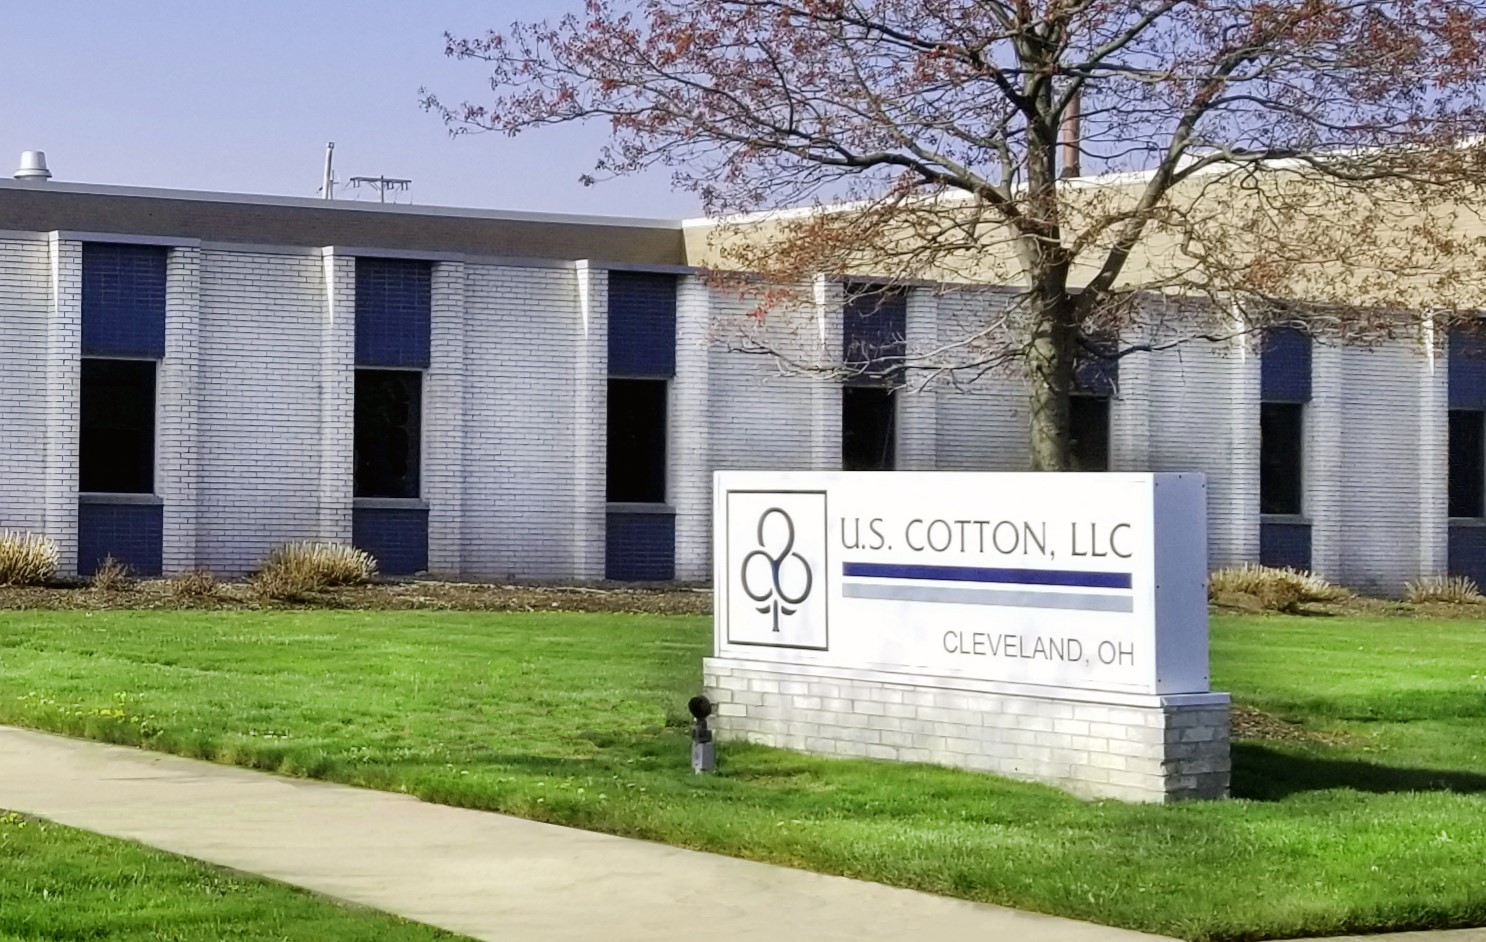 U.S. Cotton, LLC. Cleveland, Ohio